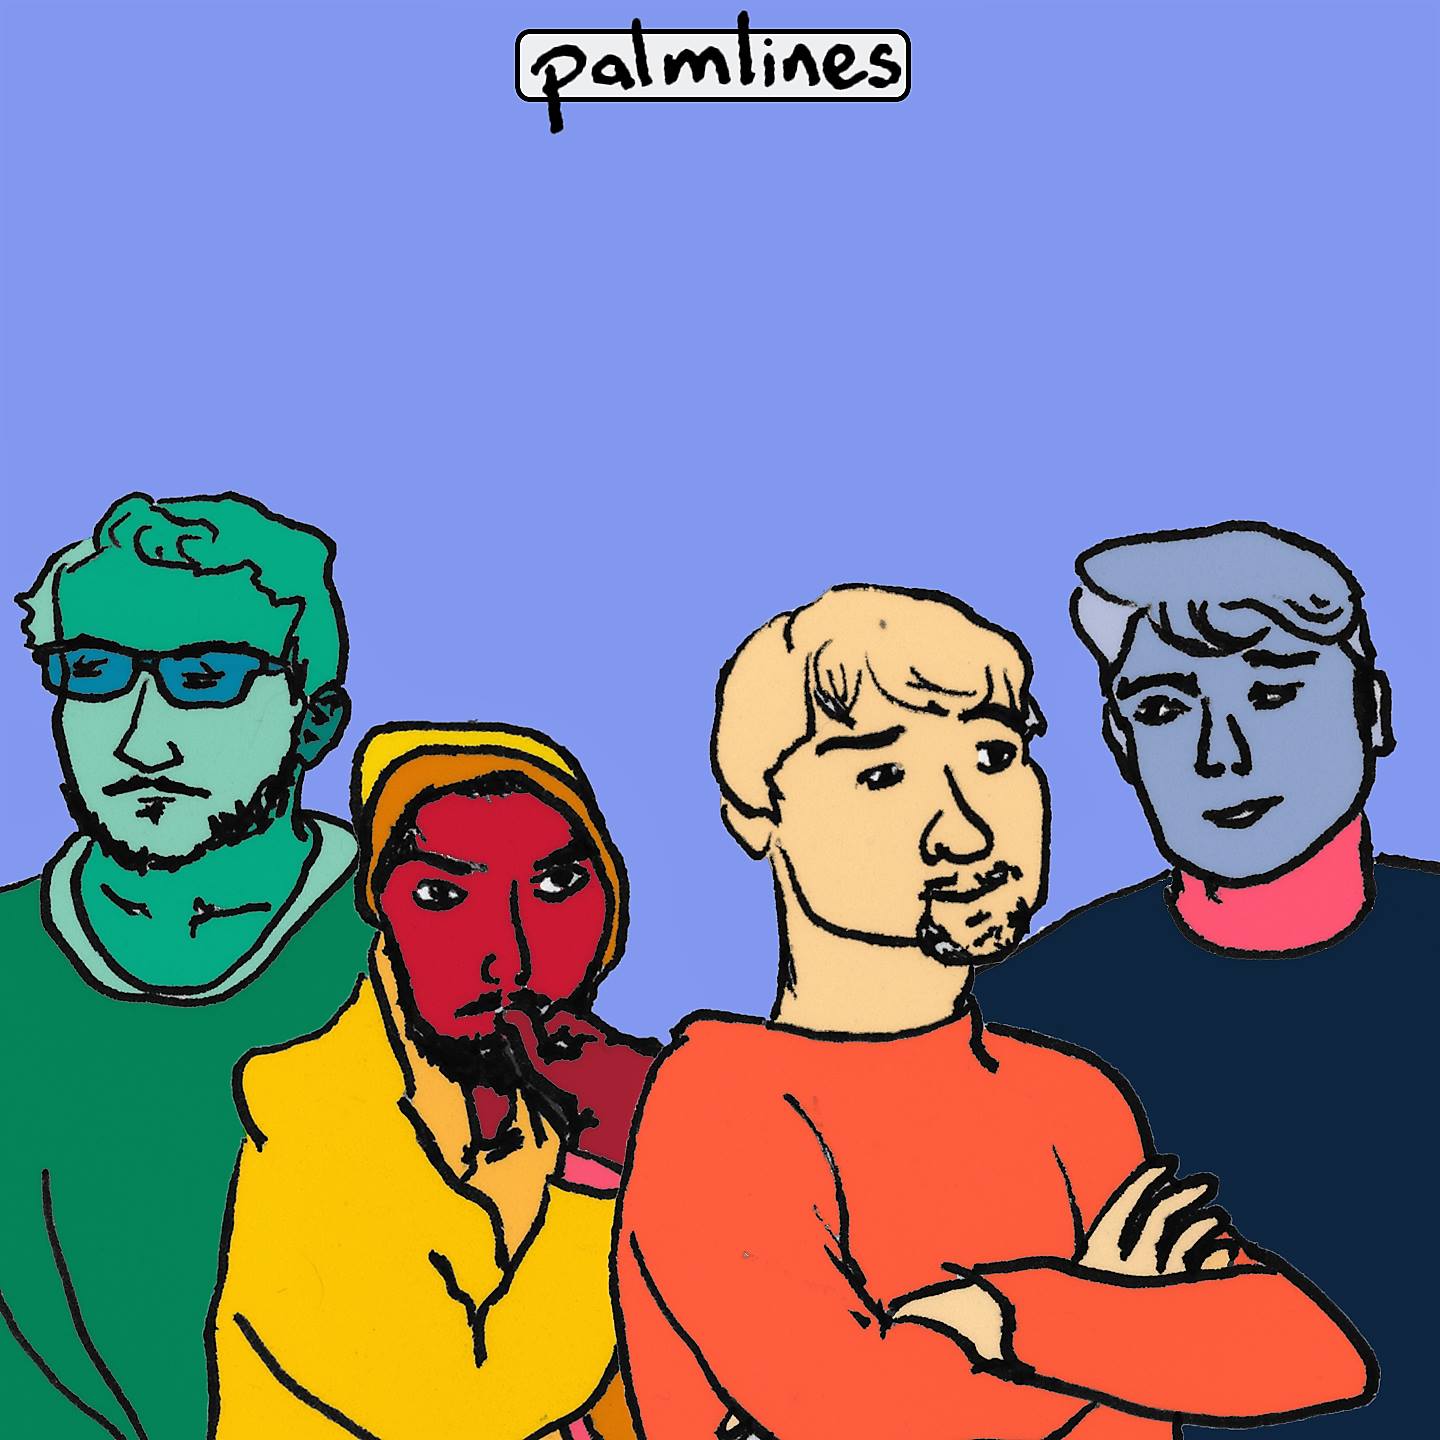 Palmlines – “Dull Brights”